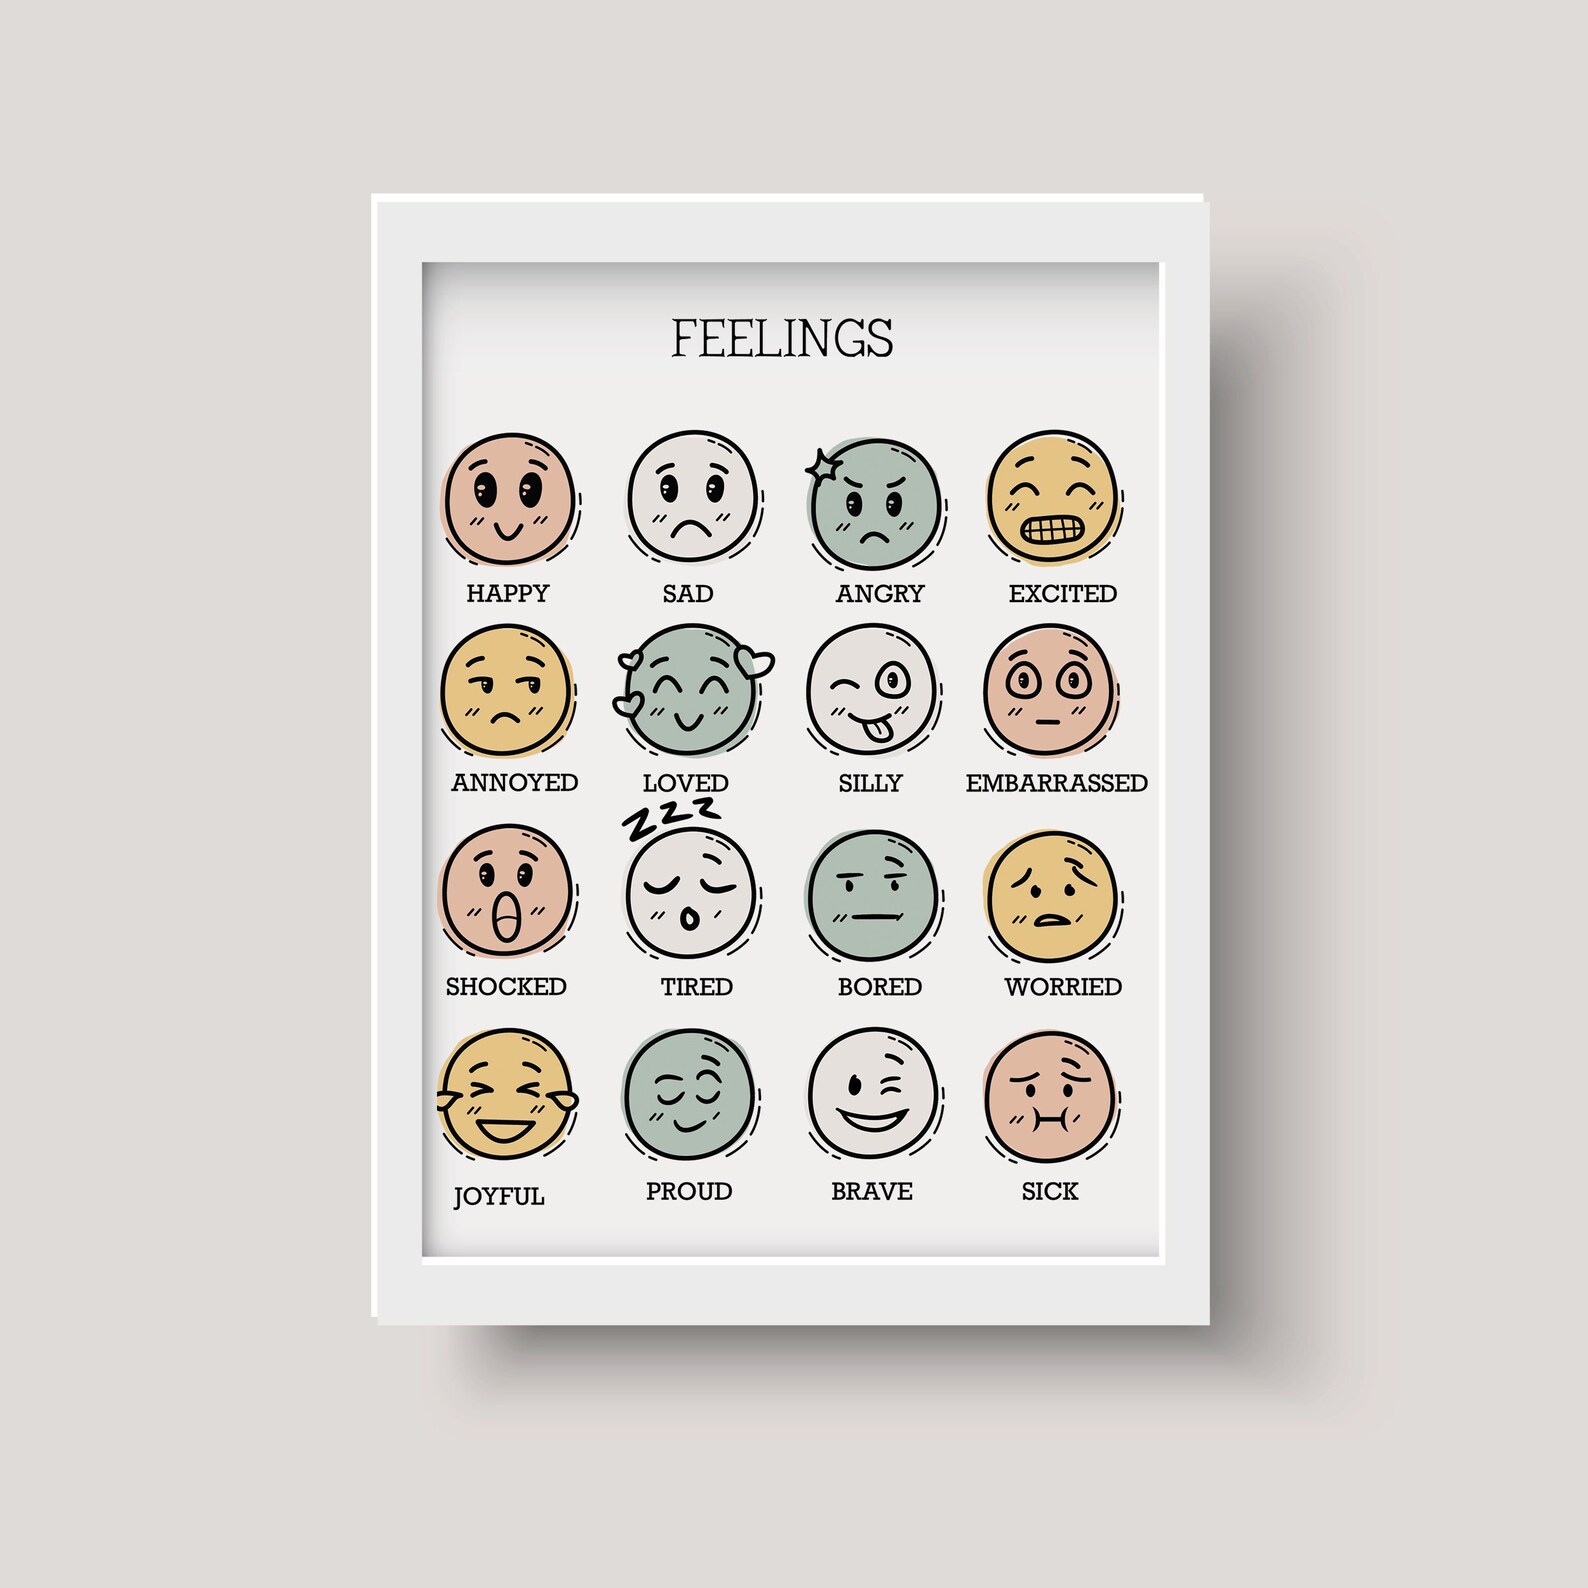 2 Feelings Poster Emotions Chart Classroom Decor Montessori | Etsy